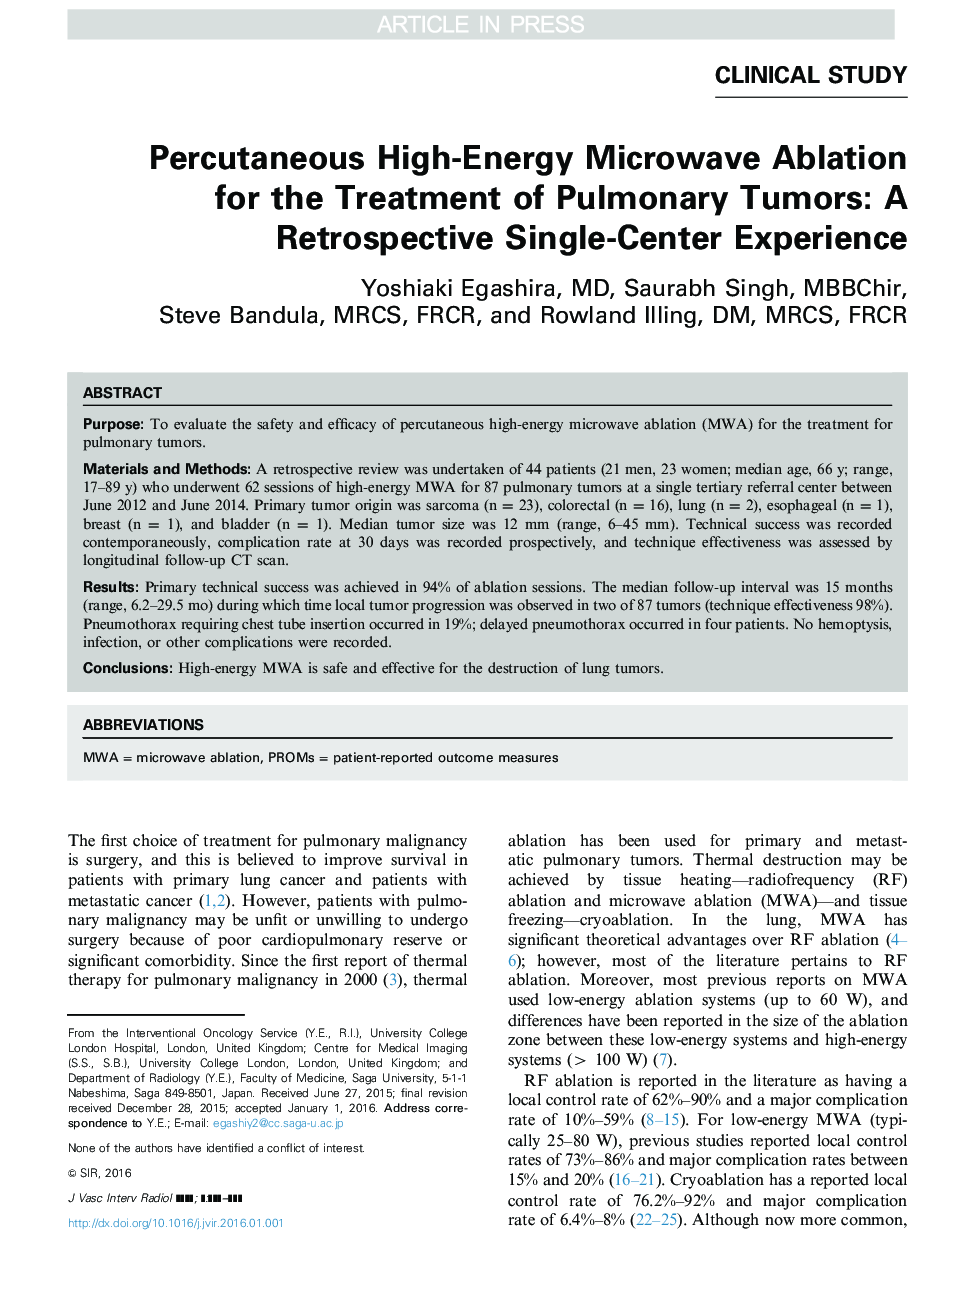 Percutaneous High-Energy Microwave Ablation for the Treatment of Pulmonary Tumors: A Retrospective Single-Center Experience